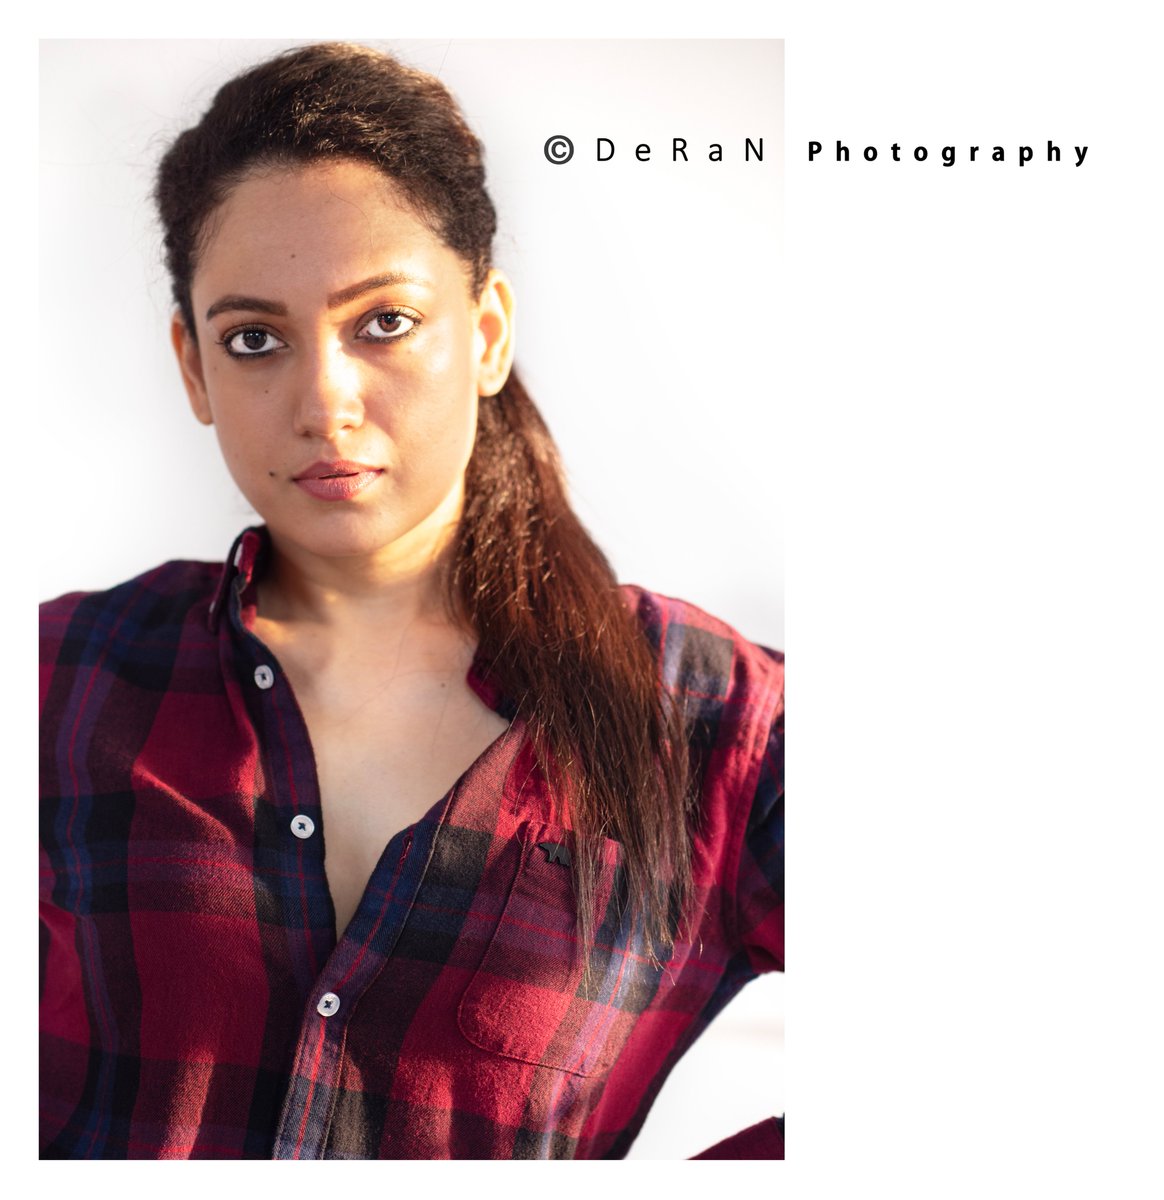 #GirijaHari #fashionphotography #westernfashion #fashionblogger #southindianactress #streetsmart #eyemakeup #glamshoot #sexyportrait #fashionportrait #portraitphotography #PanasonicLumix #lumixG9 #lumix #ChangingPhotography #lumixindia #lumixphotography #DeRaN #deranphotography